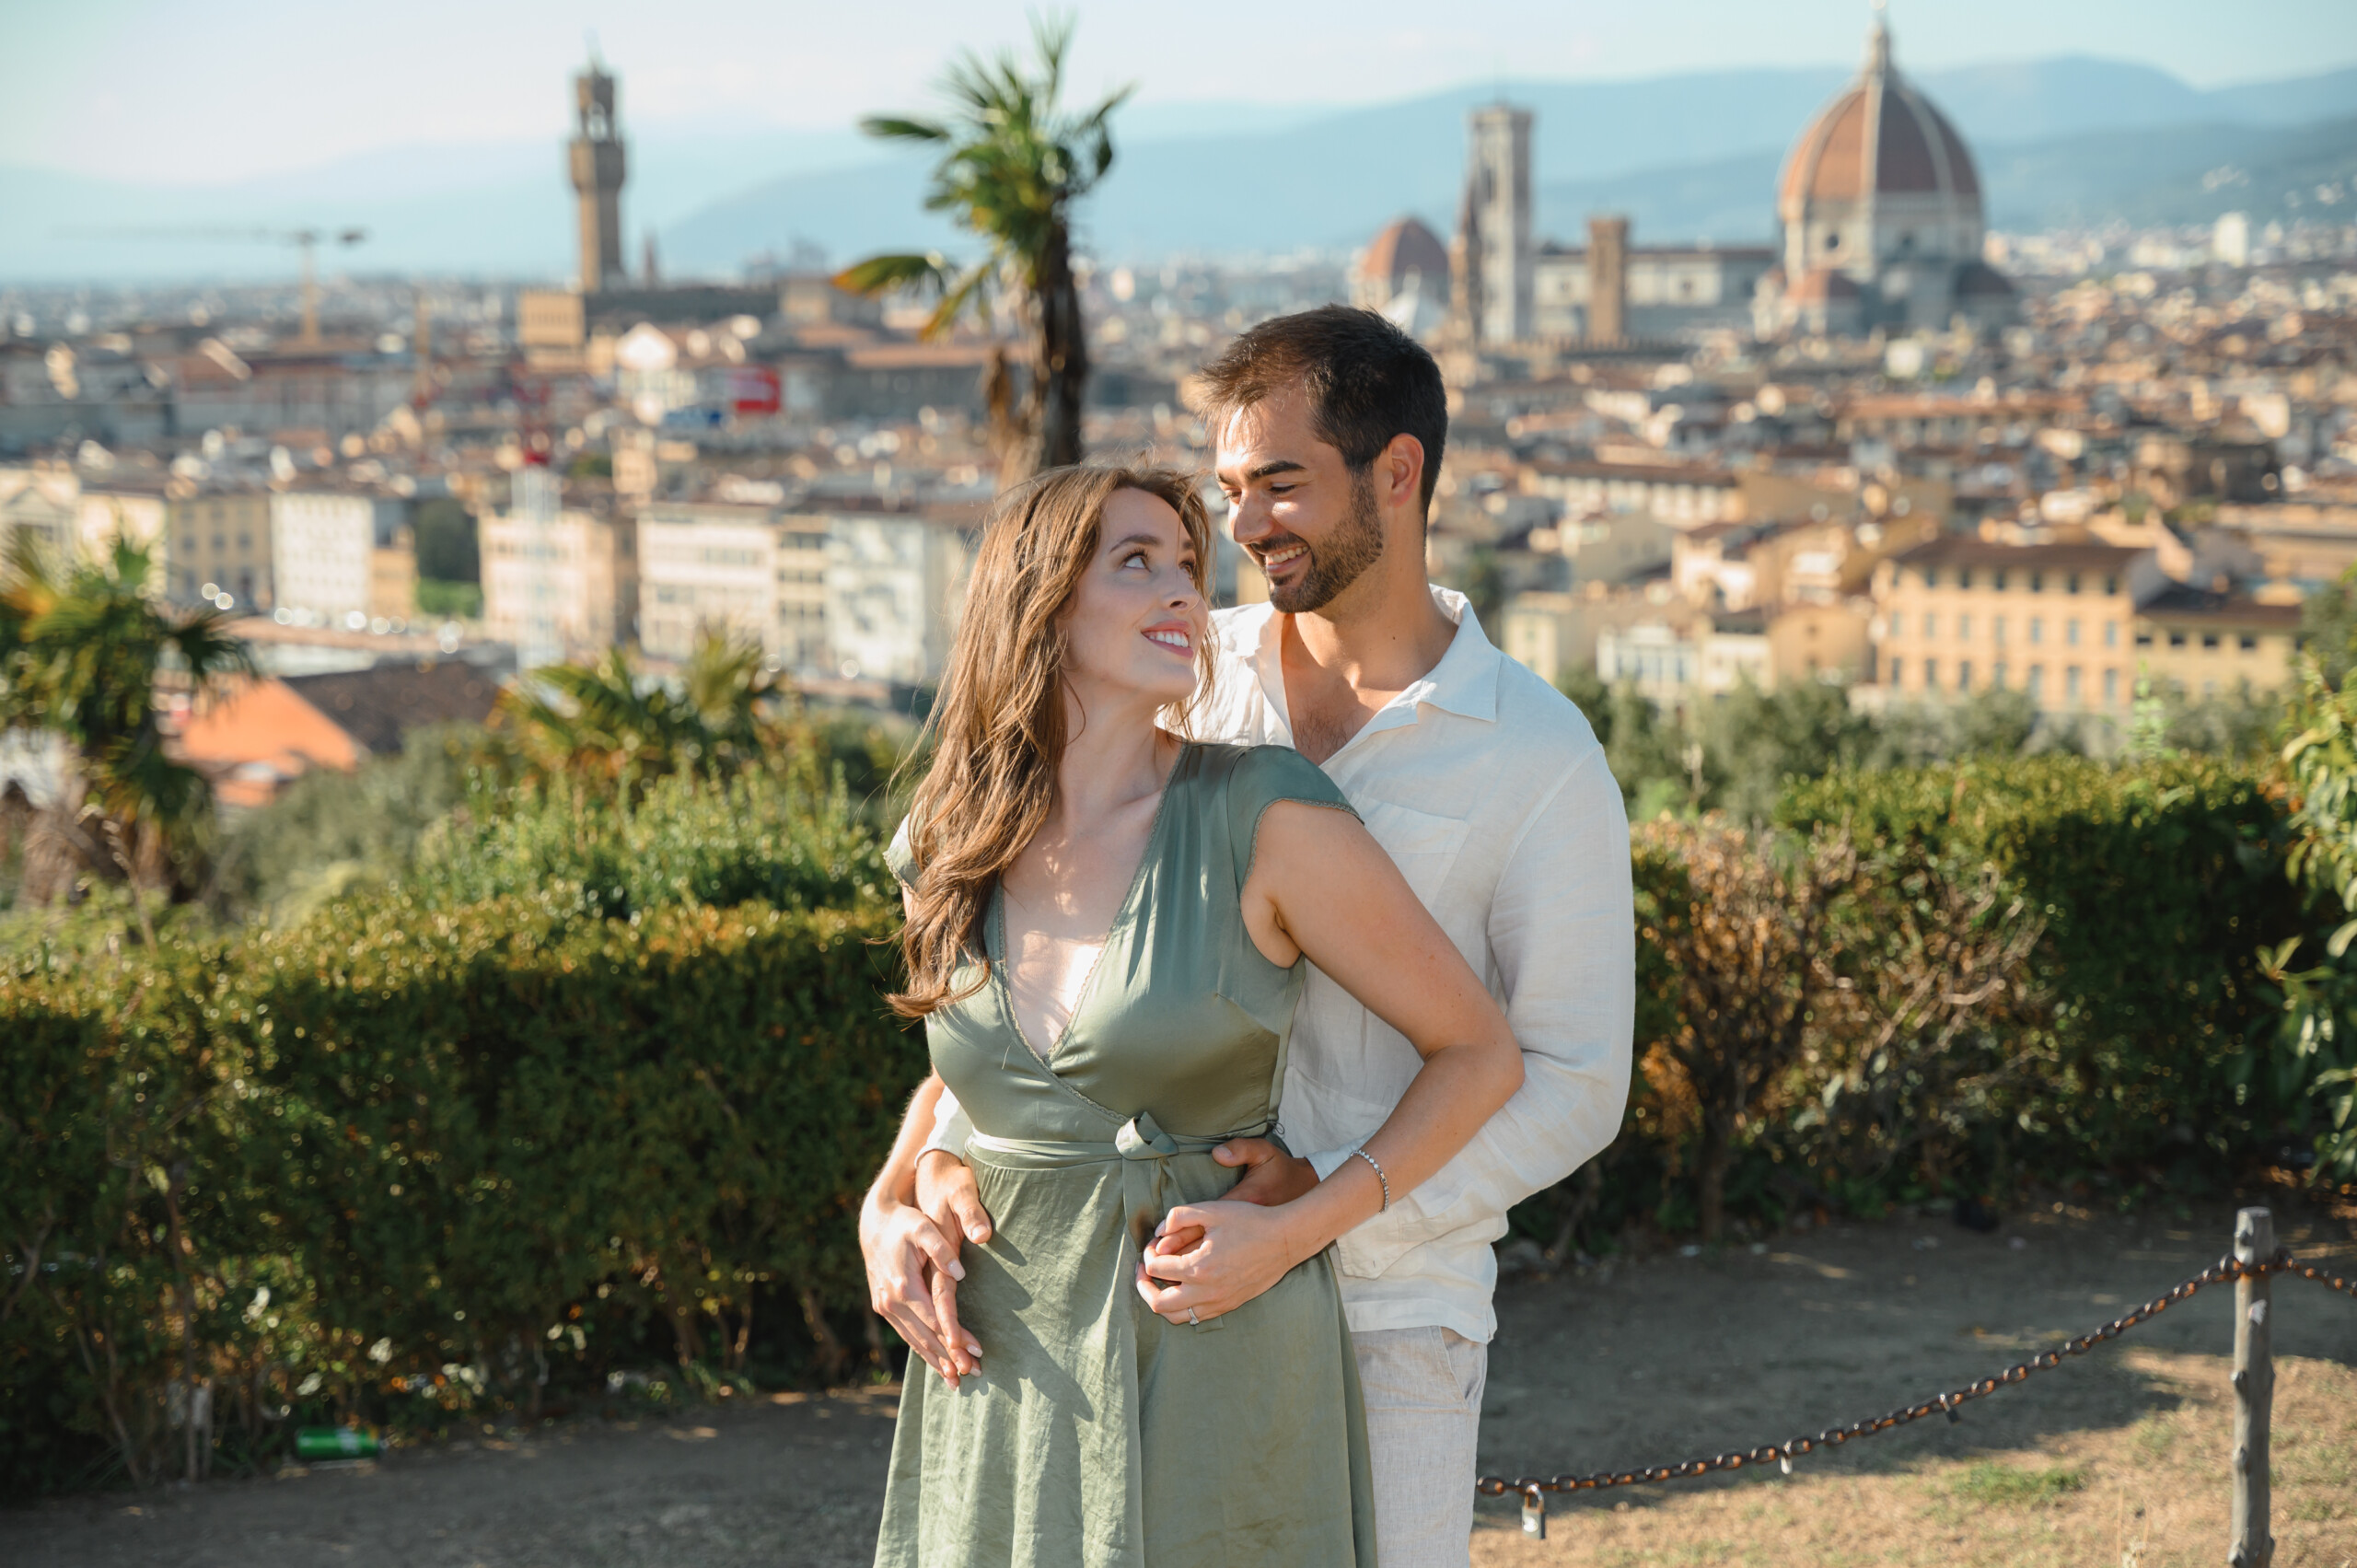 Honeymoon photoshoot by Raul, Localgrapher in Florence